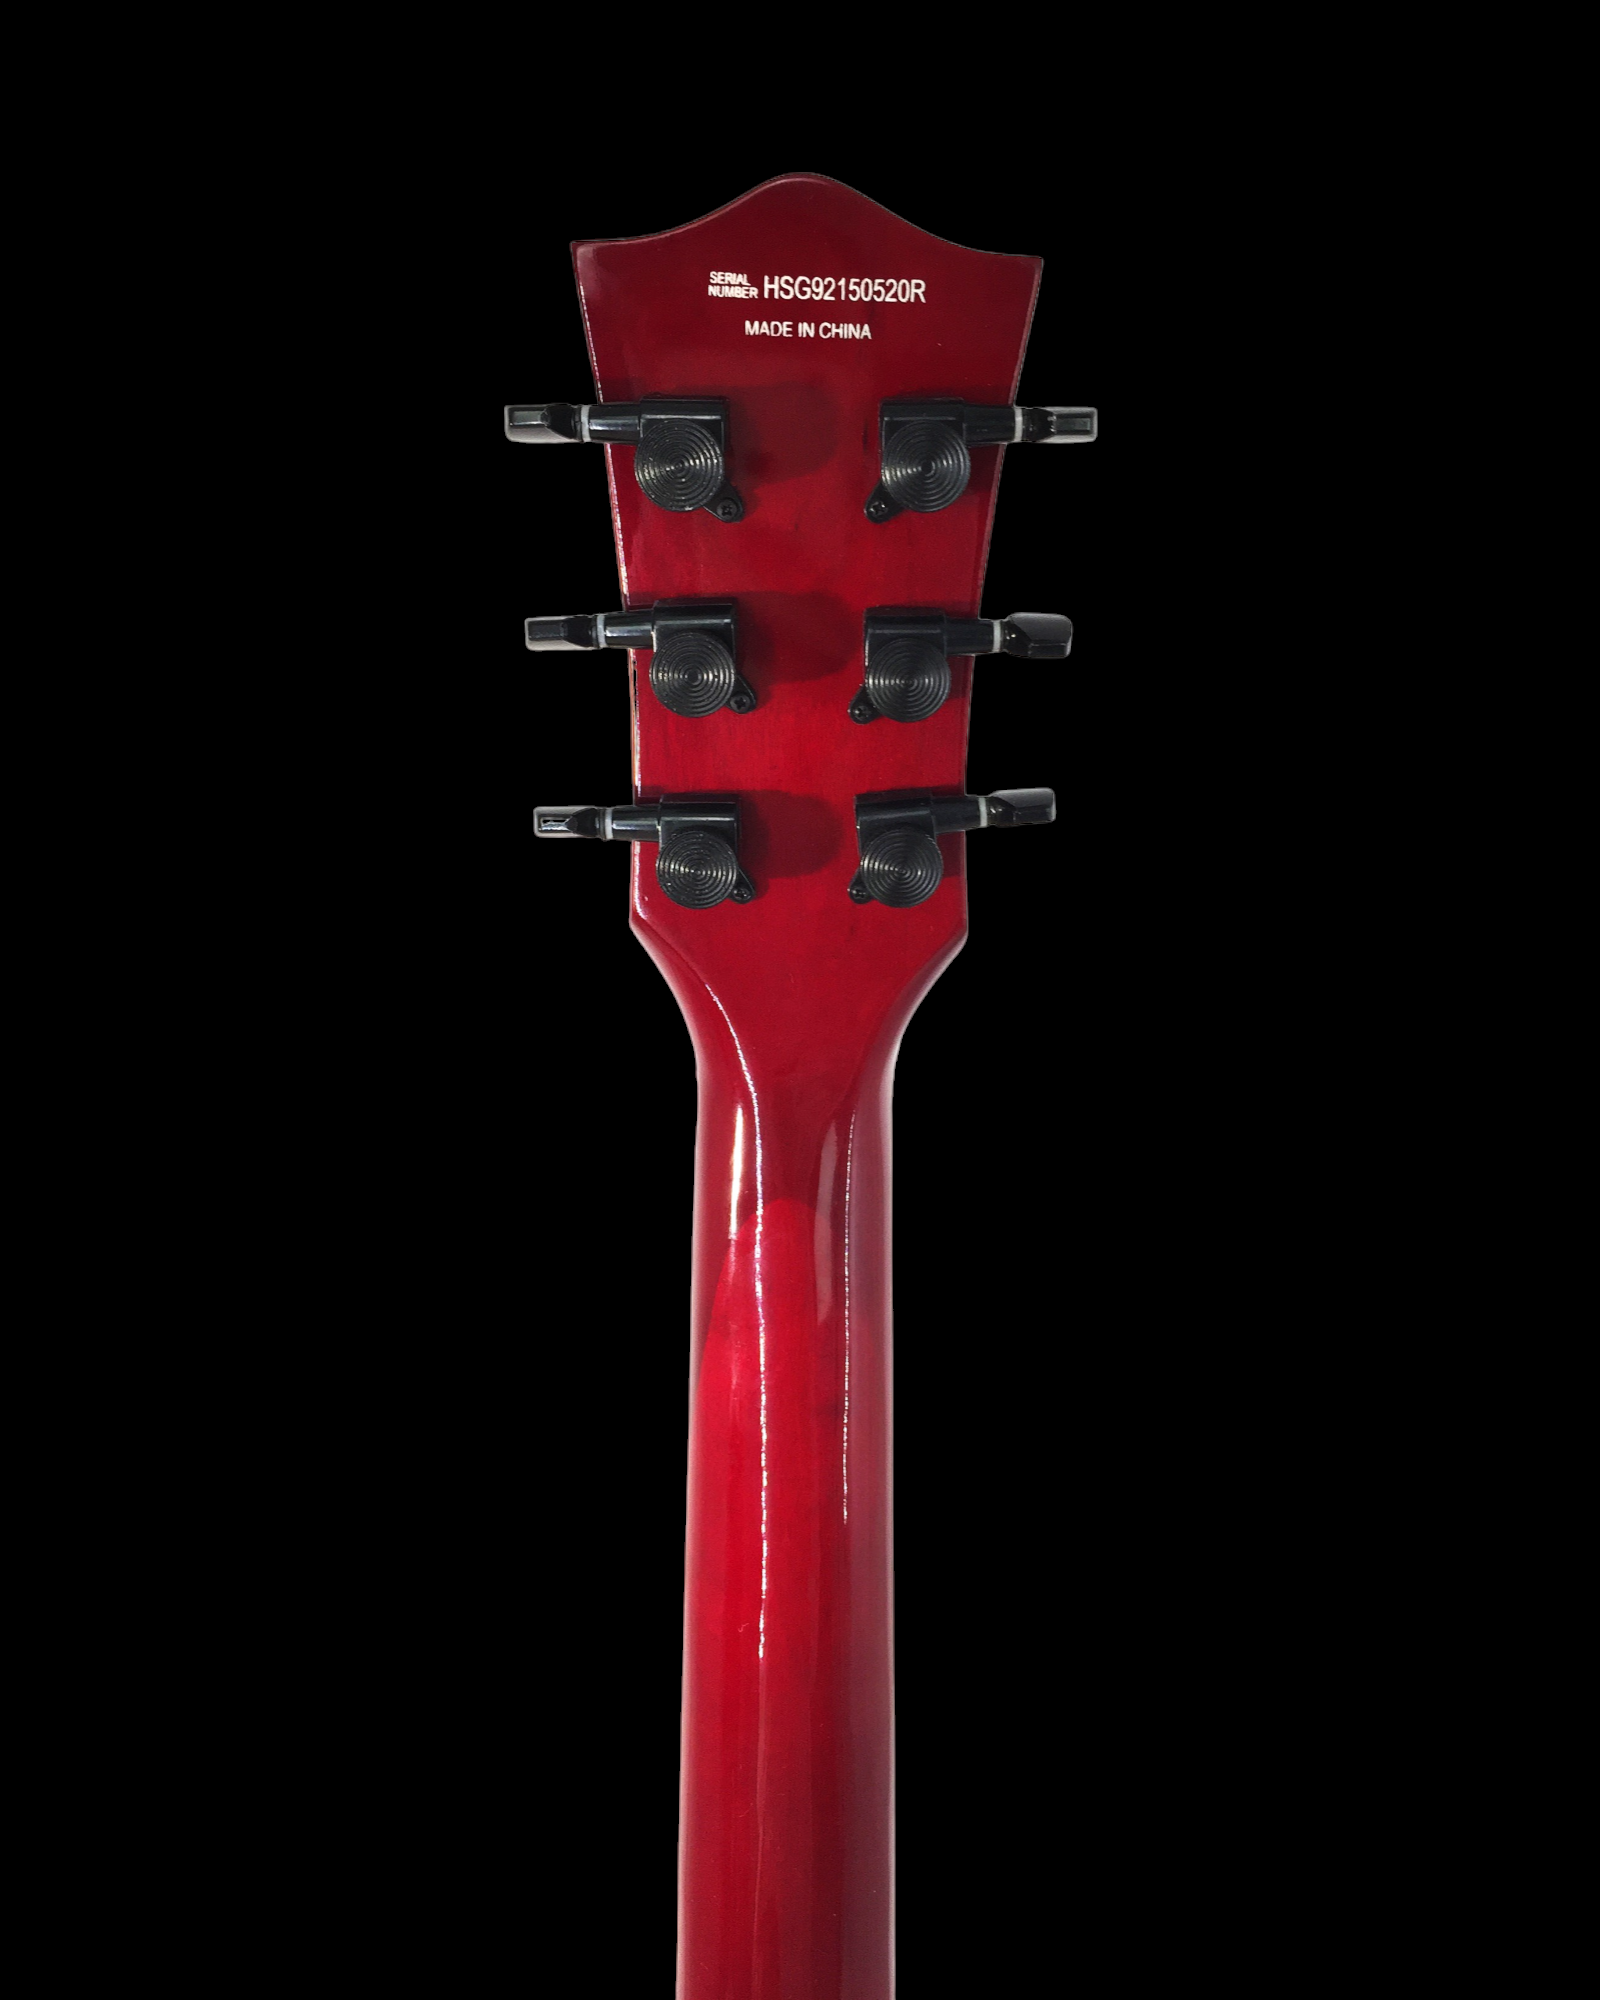 Haze Single-Cut Maple Neck Rosewood Fingerboard HLP Electric Guitar - Sunburst HSG9TCS